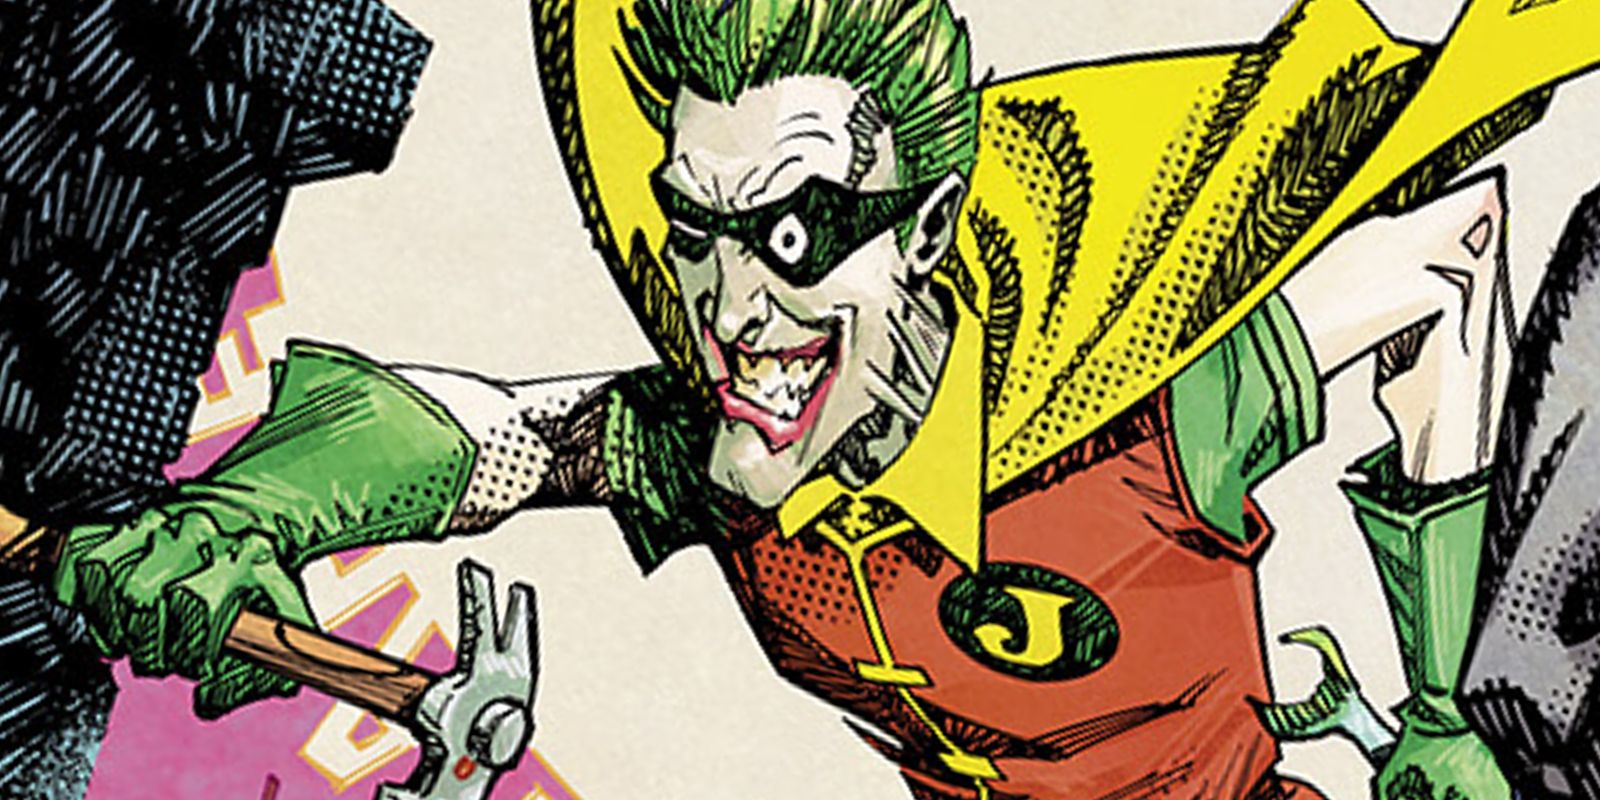 Joker as Robin